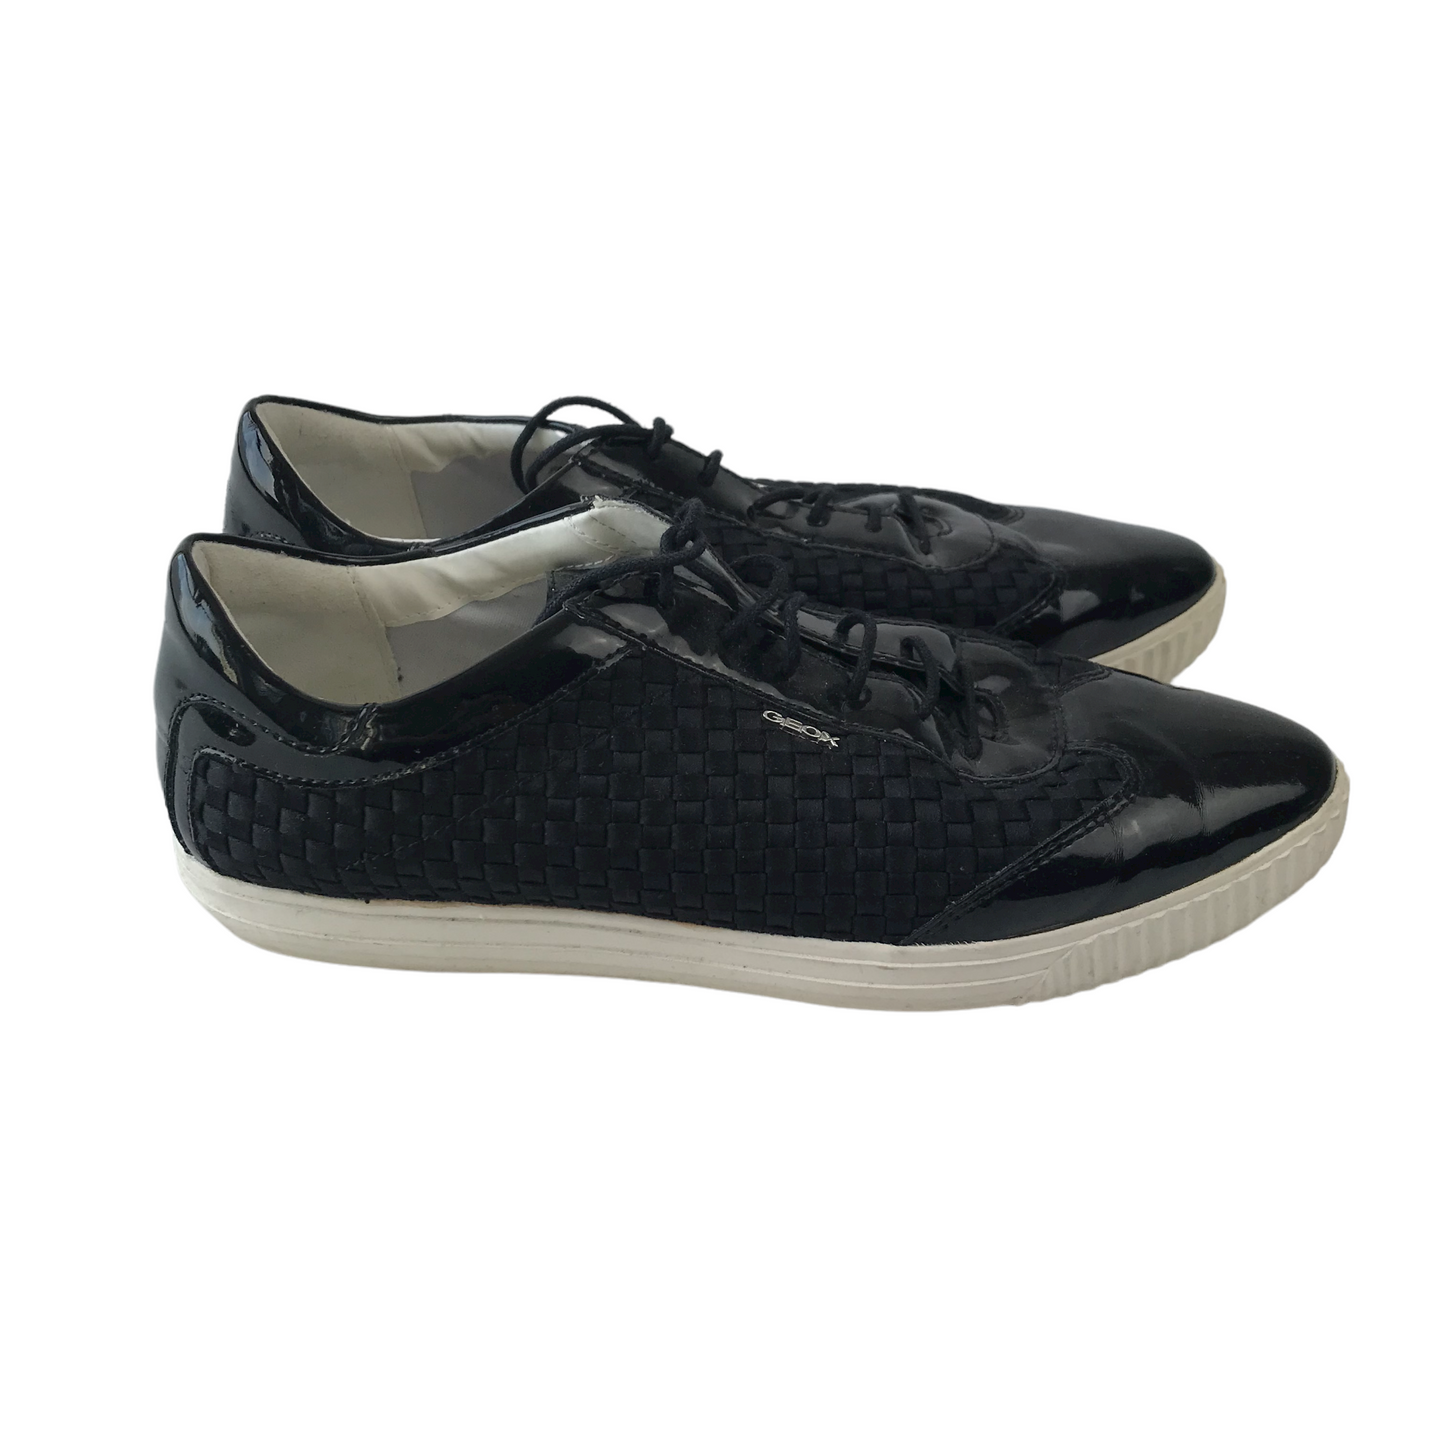 Geox Black Pointy Trainers Shoe Size 5